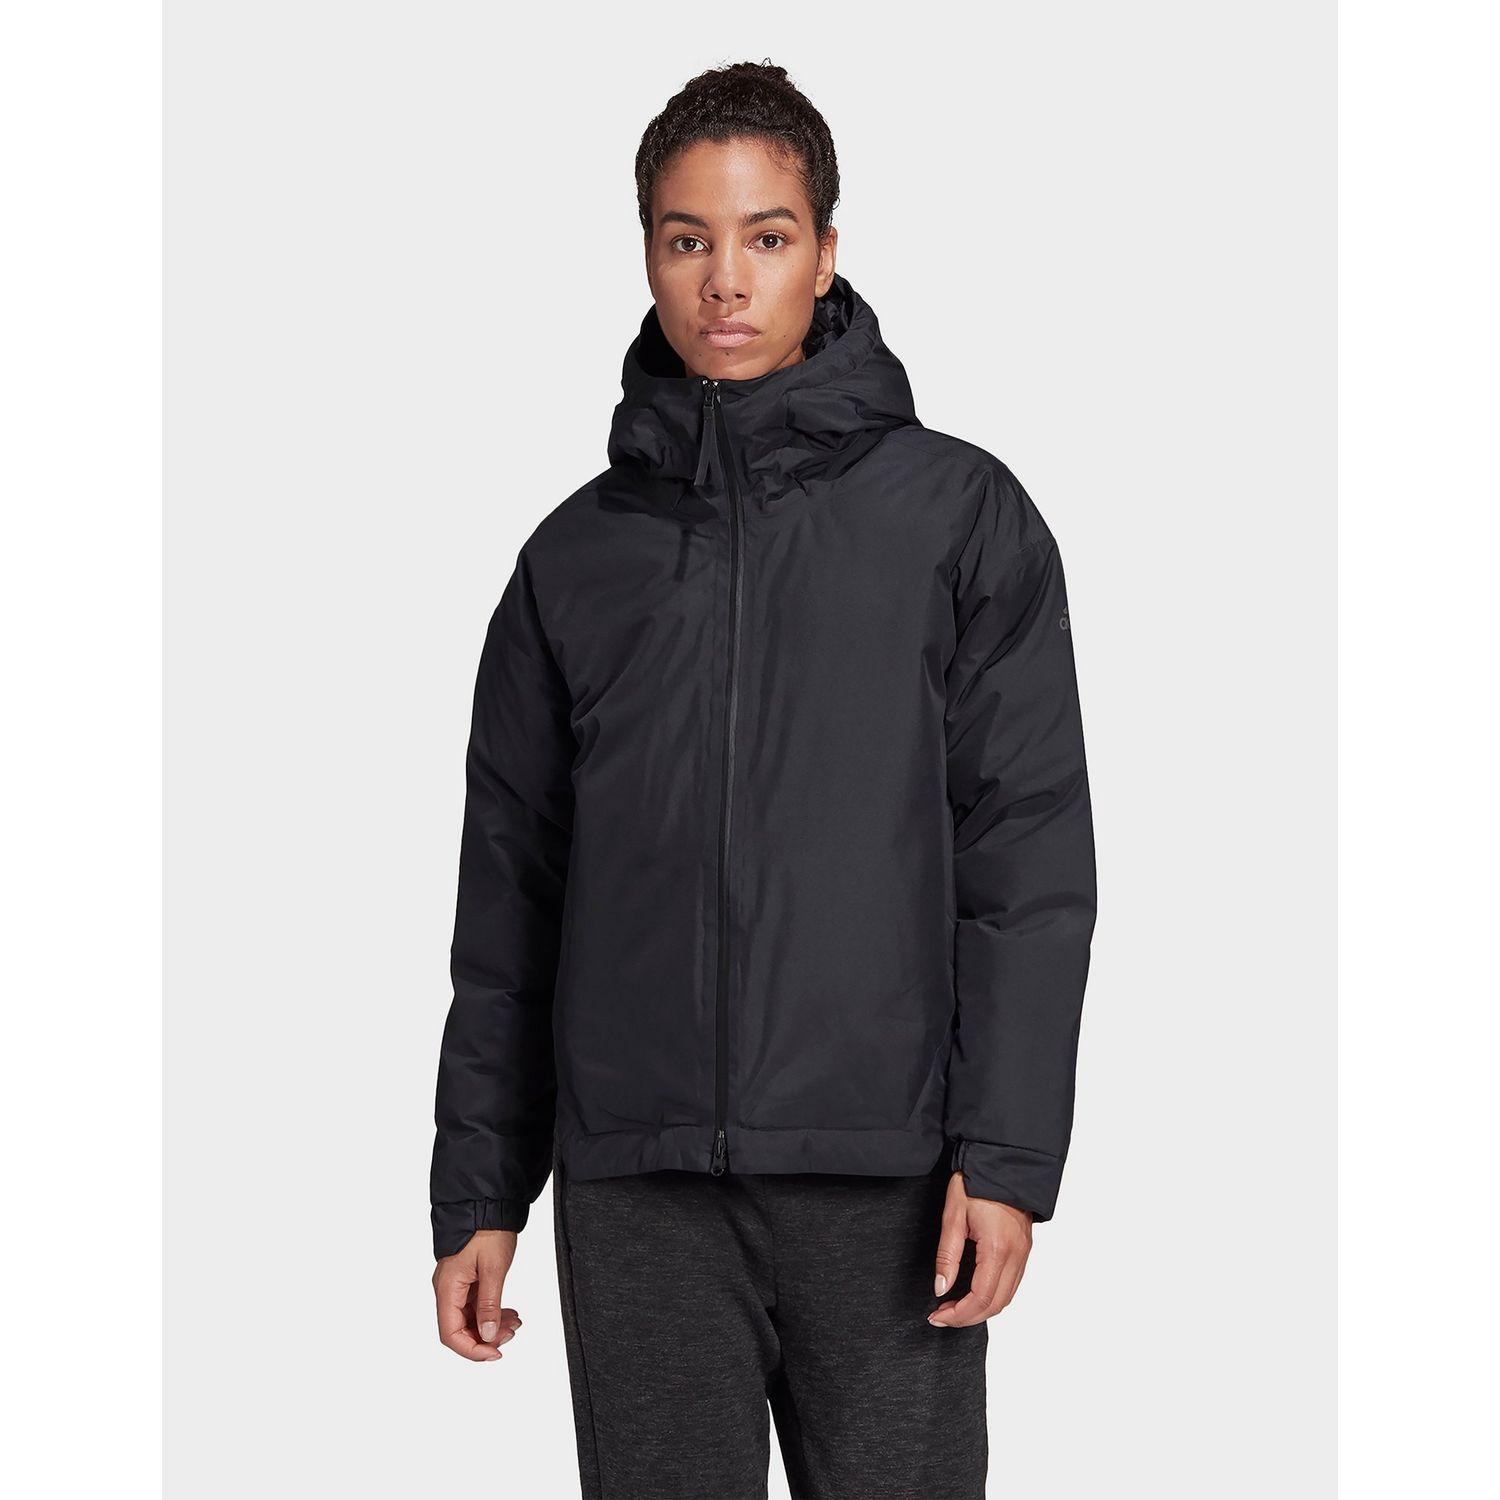 adidas Originals Synthetic Urban Insulated Rain Jacket in Black - Lyst